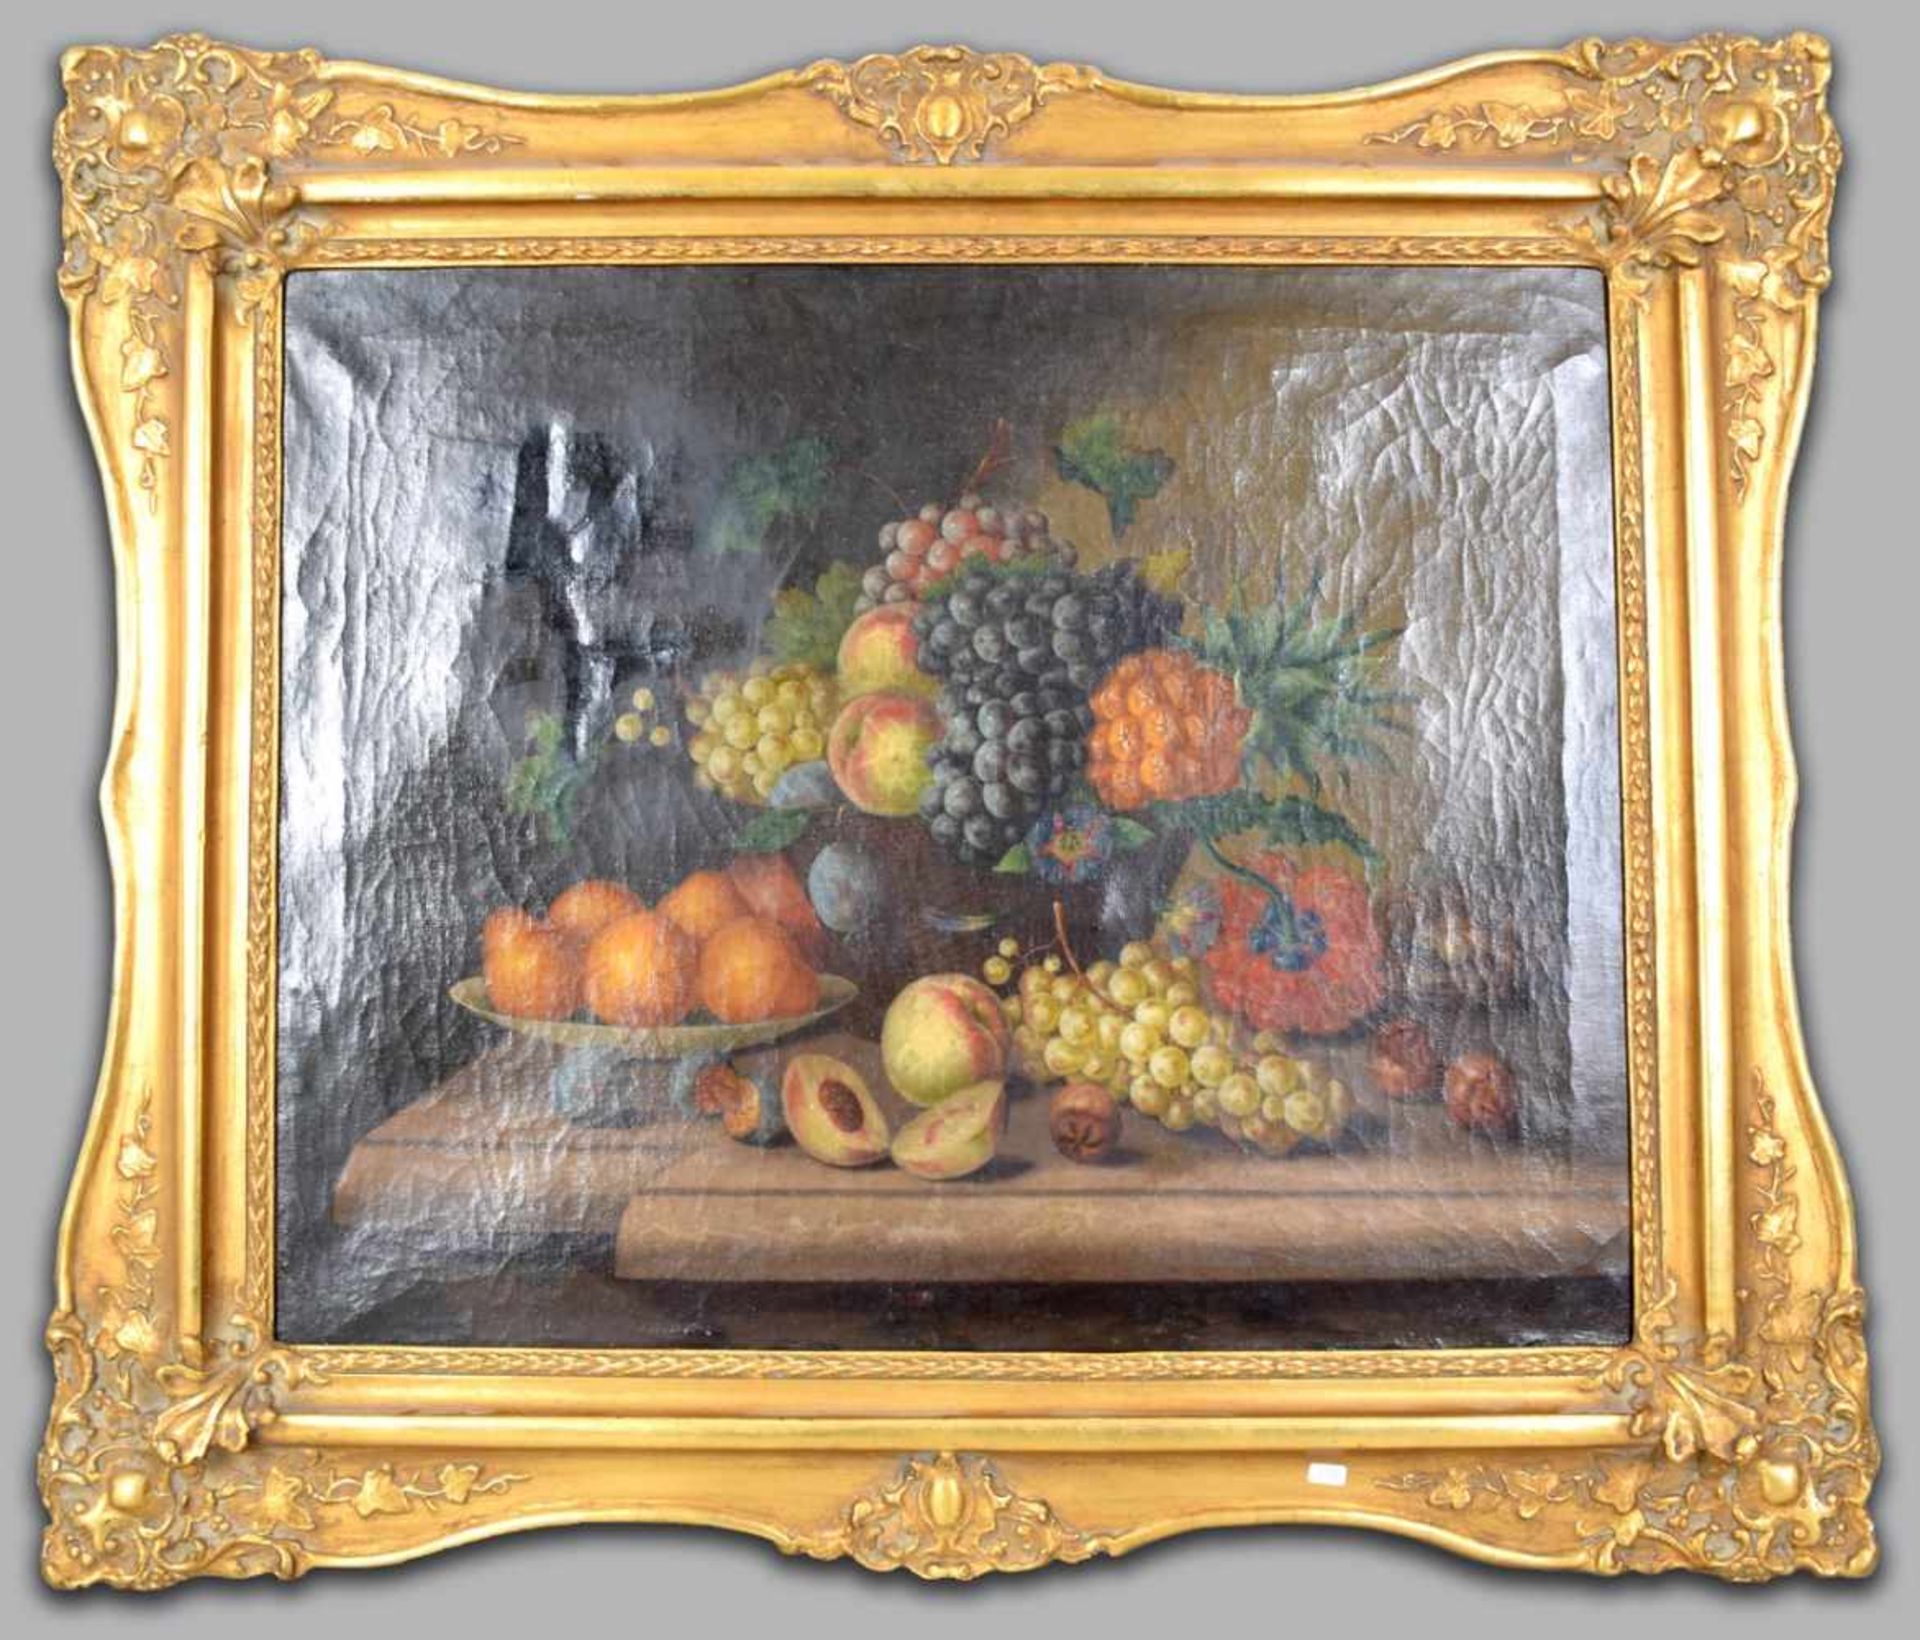 Unbekannter Maler 19. Jh., Früchtestilleben auf Tisch, Öl/Lwd., besch., 55 X 69 cm, dek. Goldrahmen